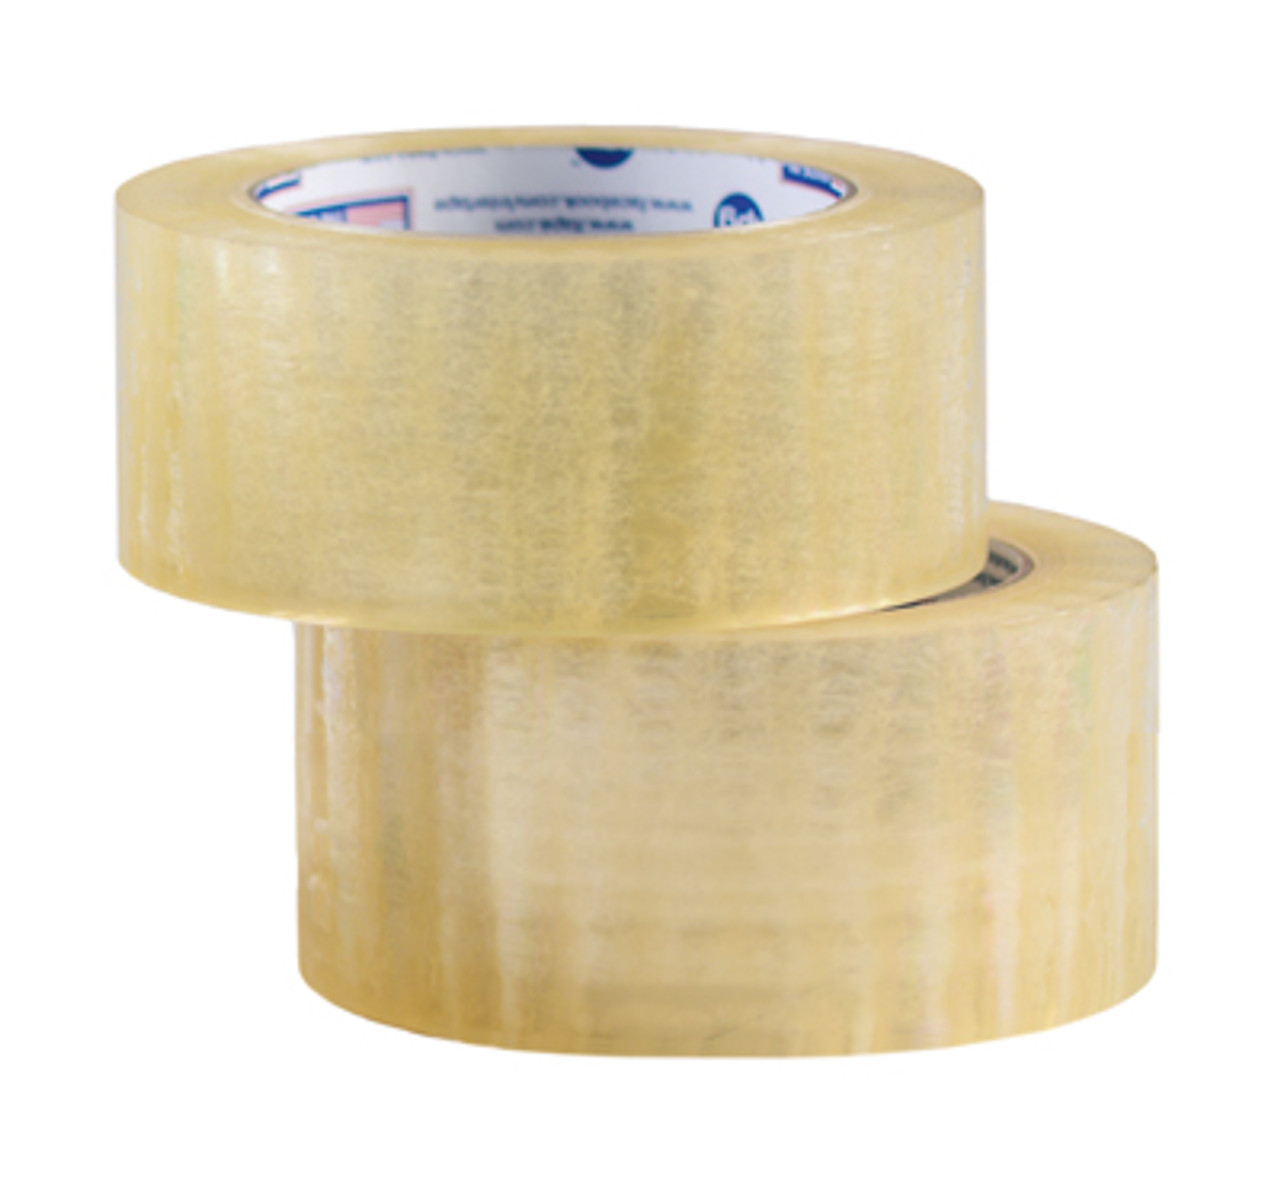 Acrylic Adhesive Carton Sealing Tape - Clear (2.1 mil) (Sold per carton)